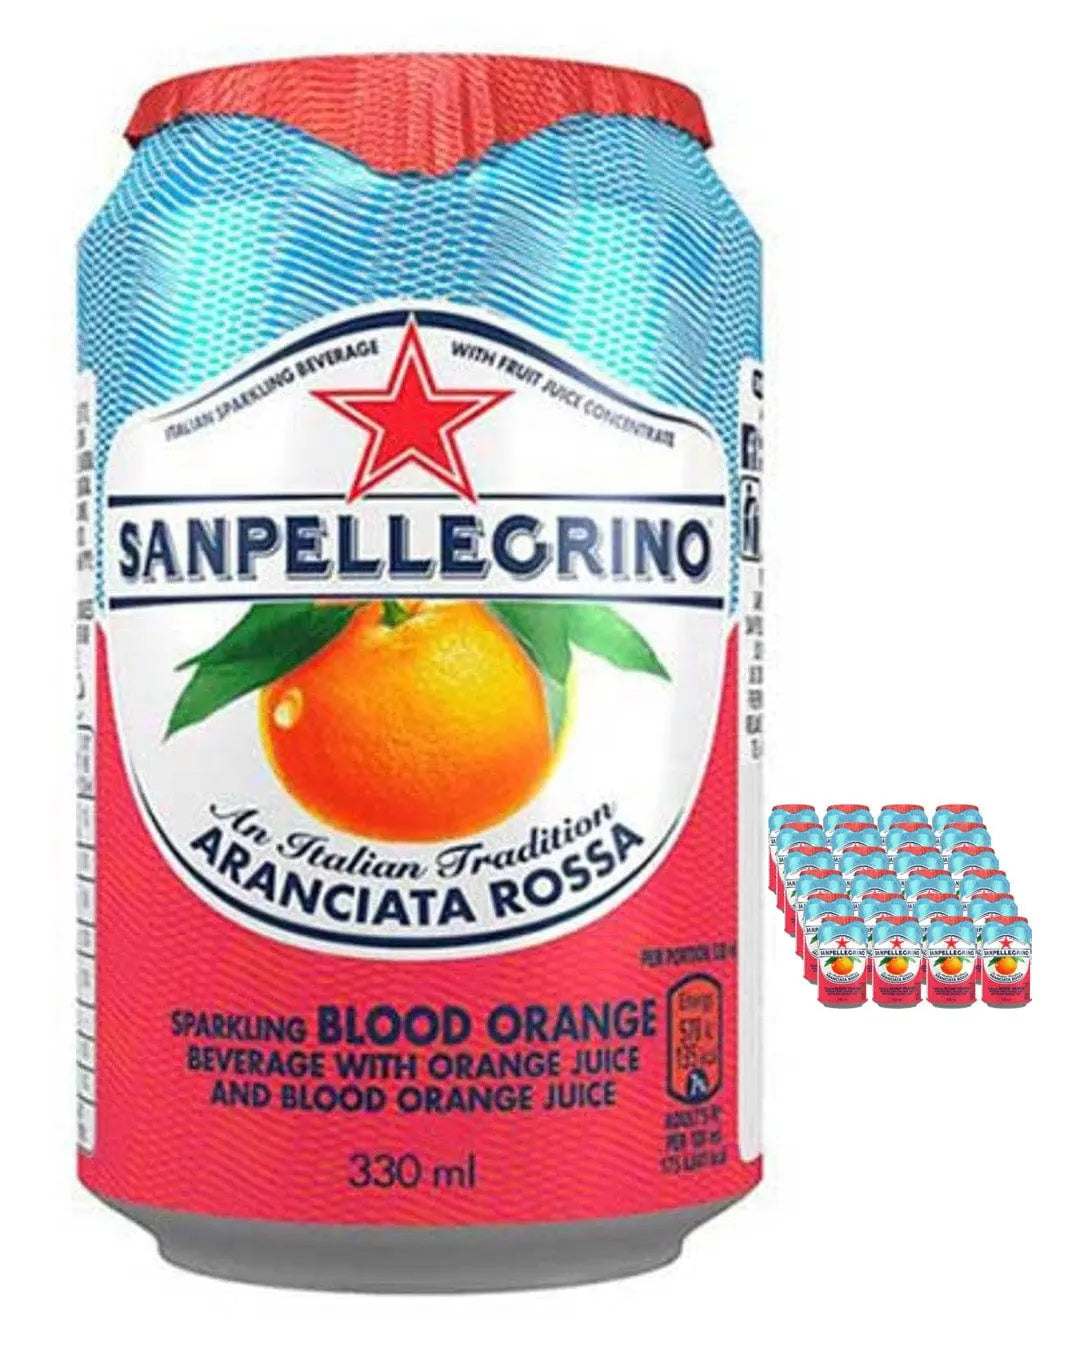 San Pellegrino Aranciata Rossa Blood Orange Multipack, 24 x 330 ml Water